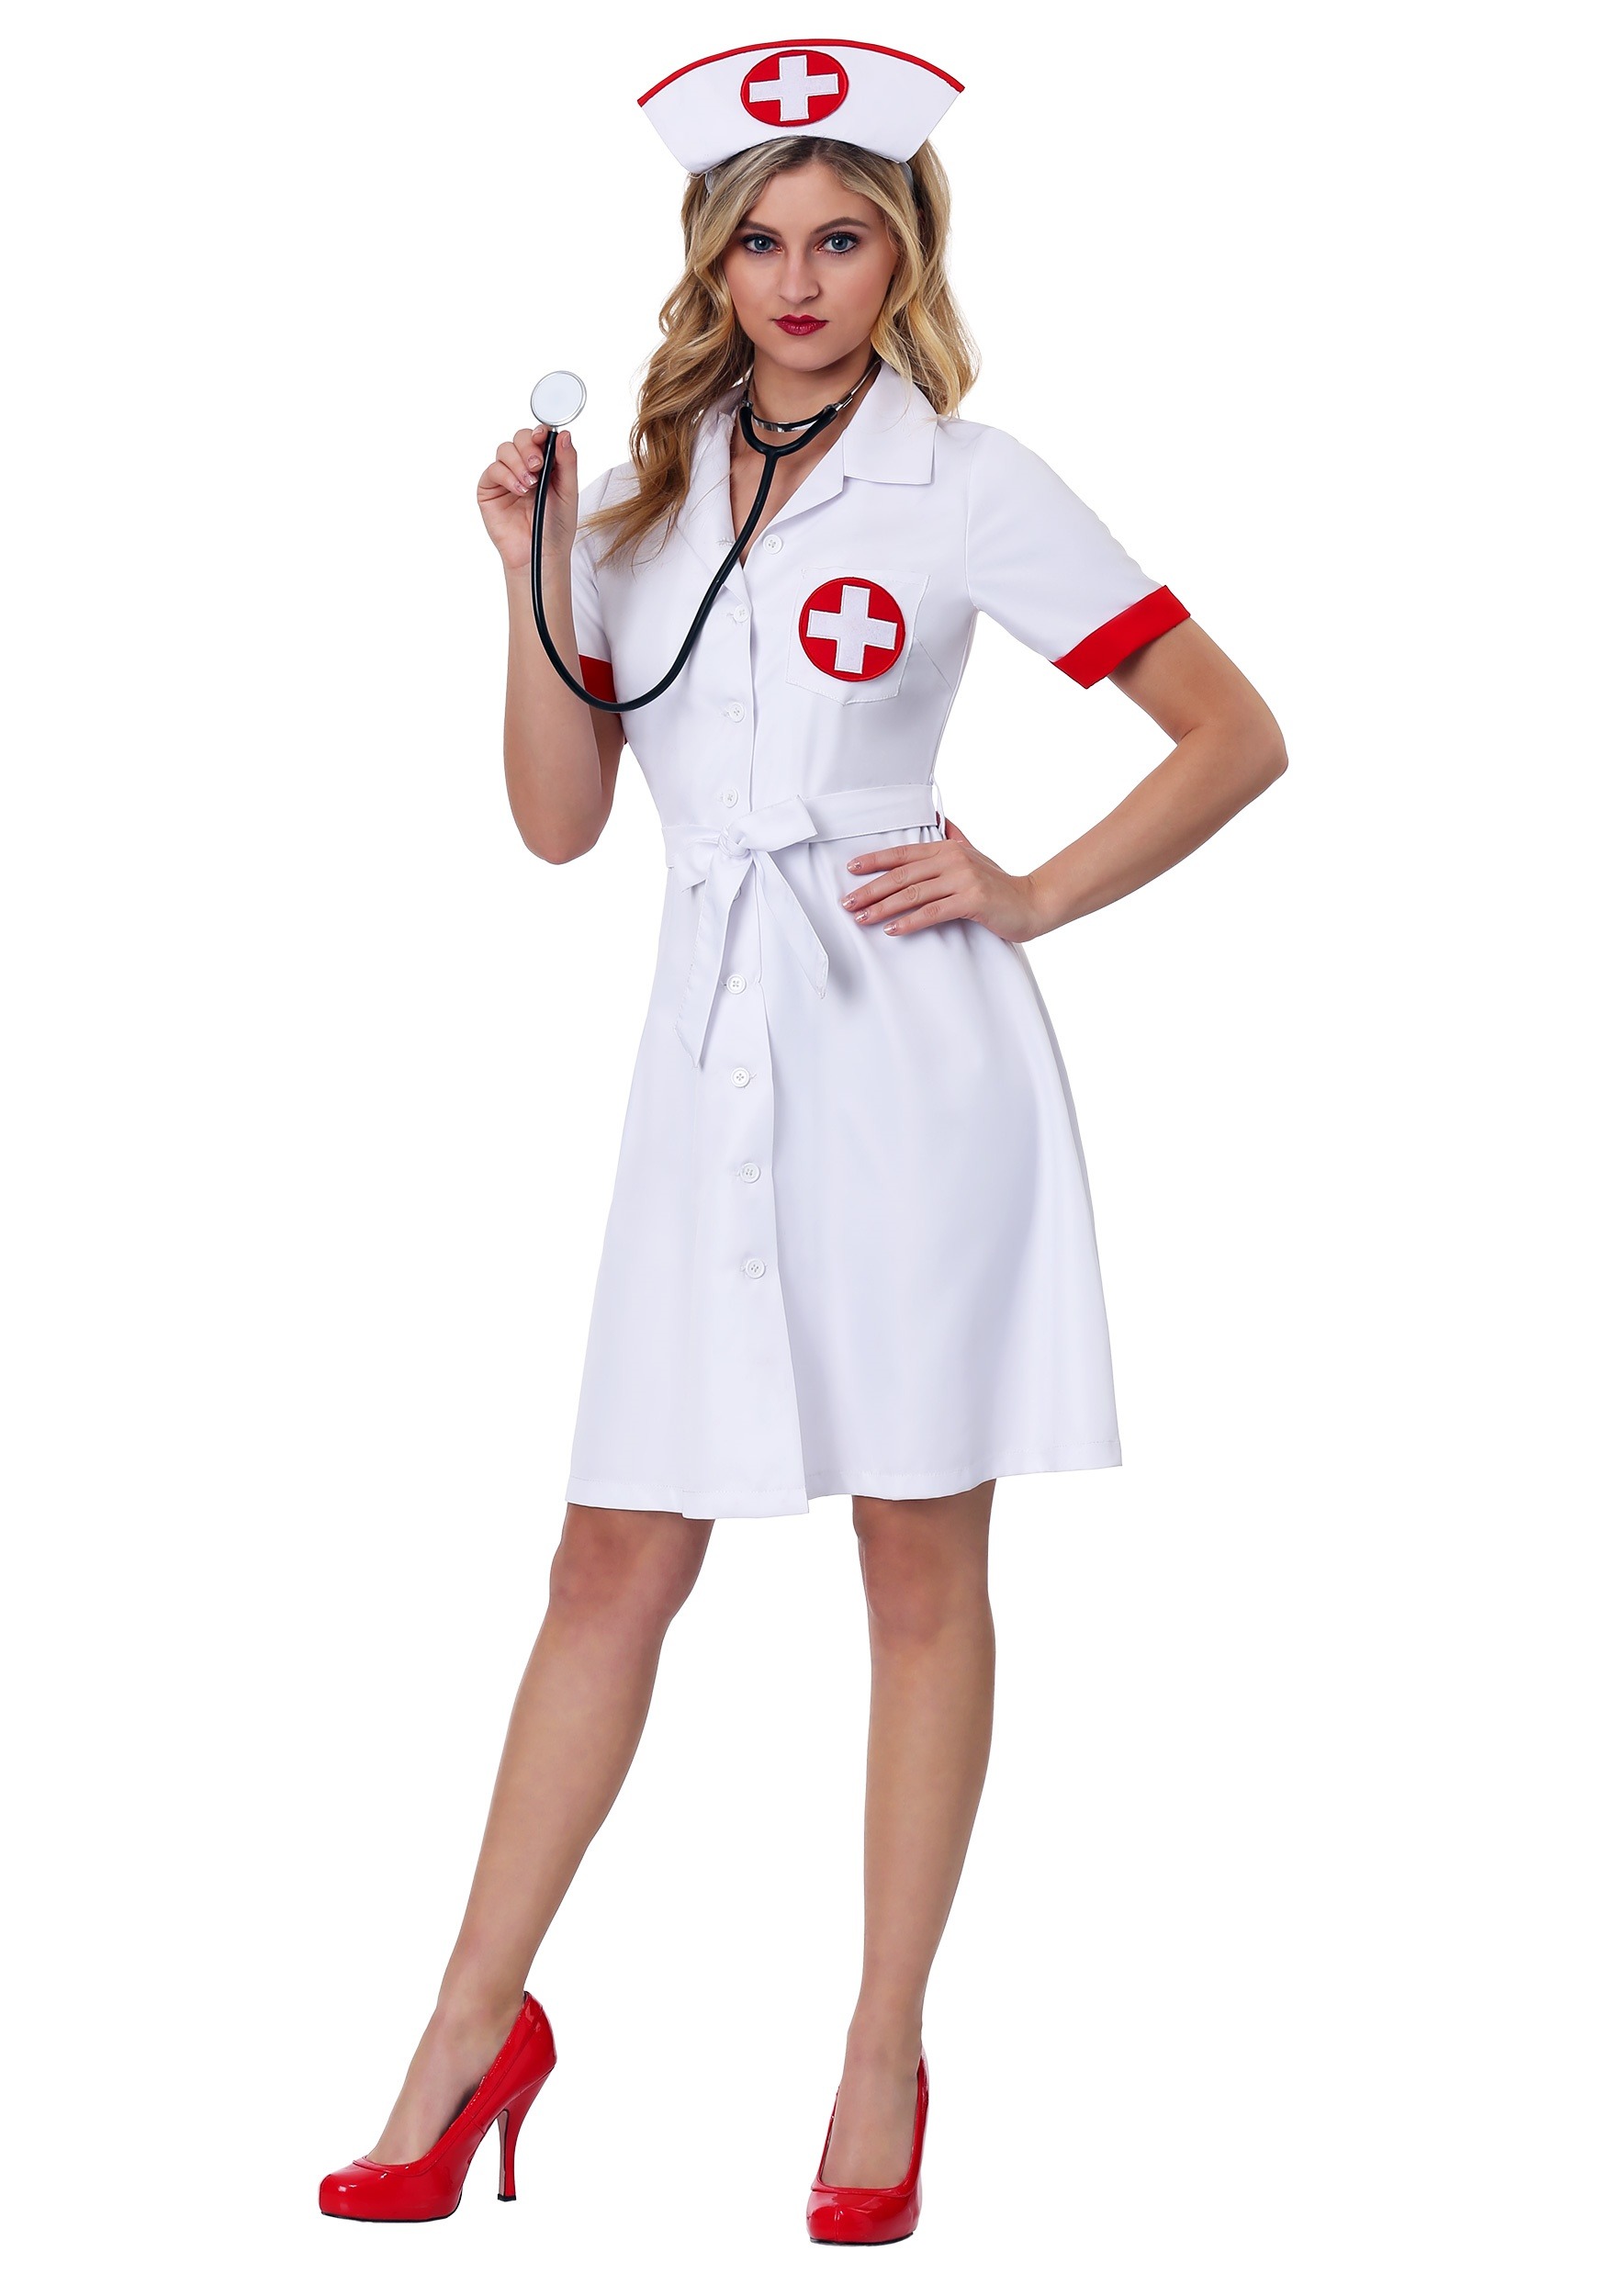 How Nurse Dress 